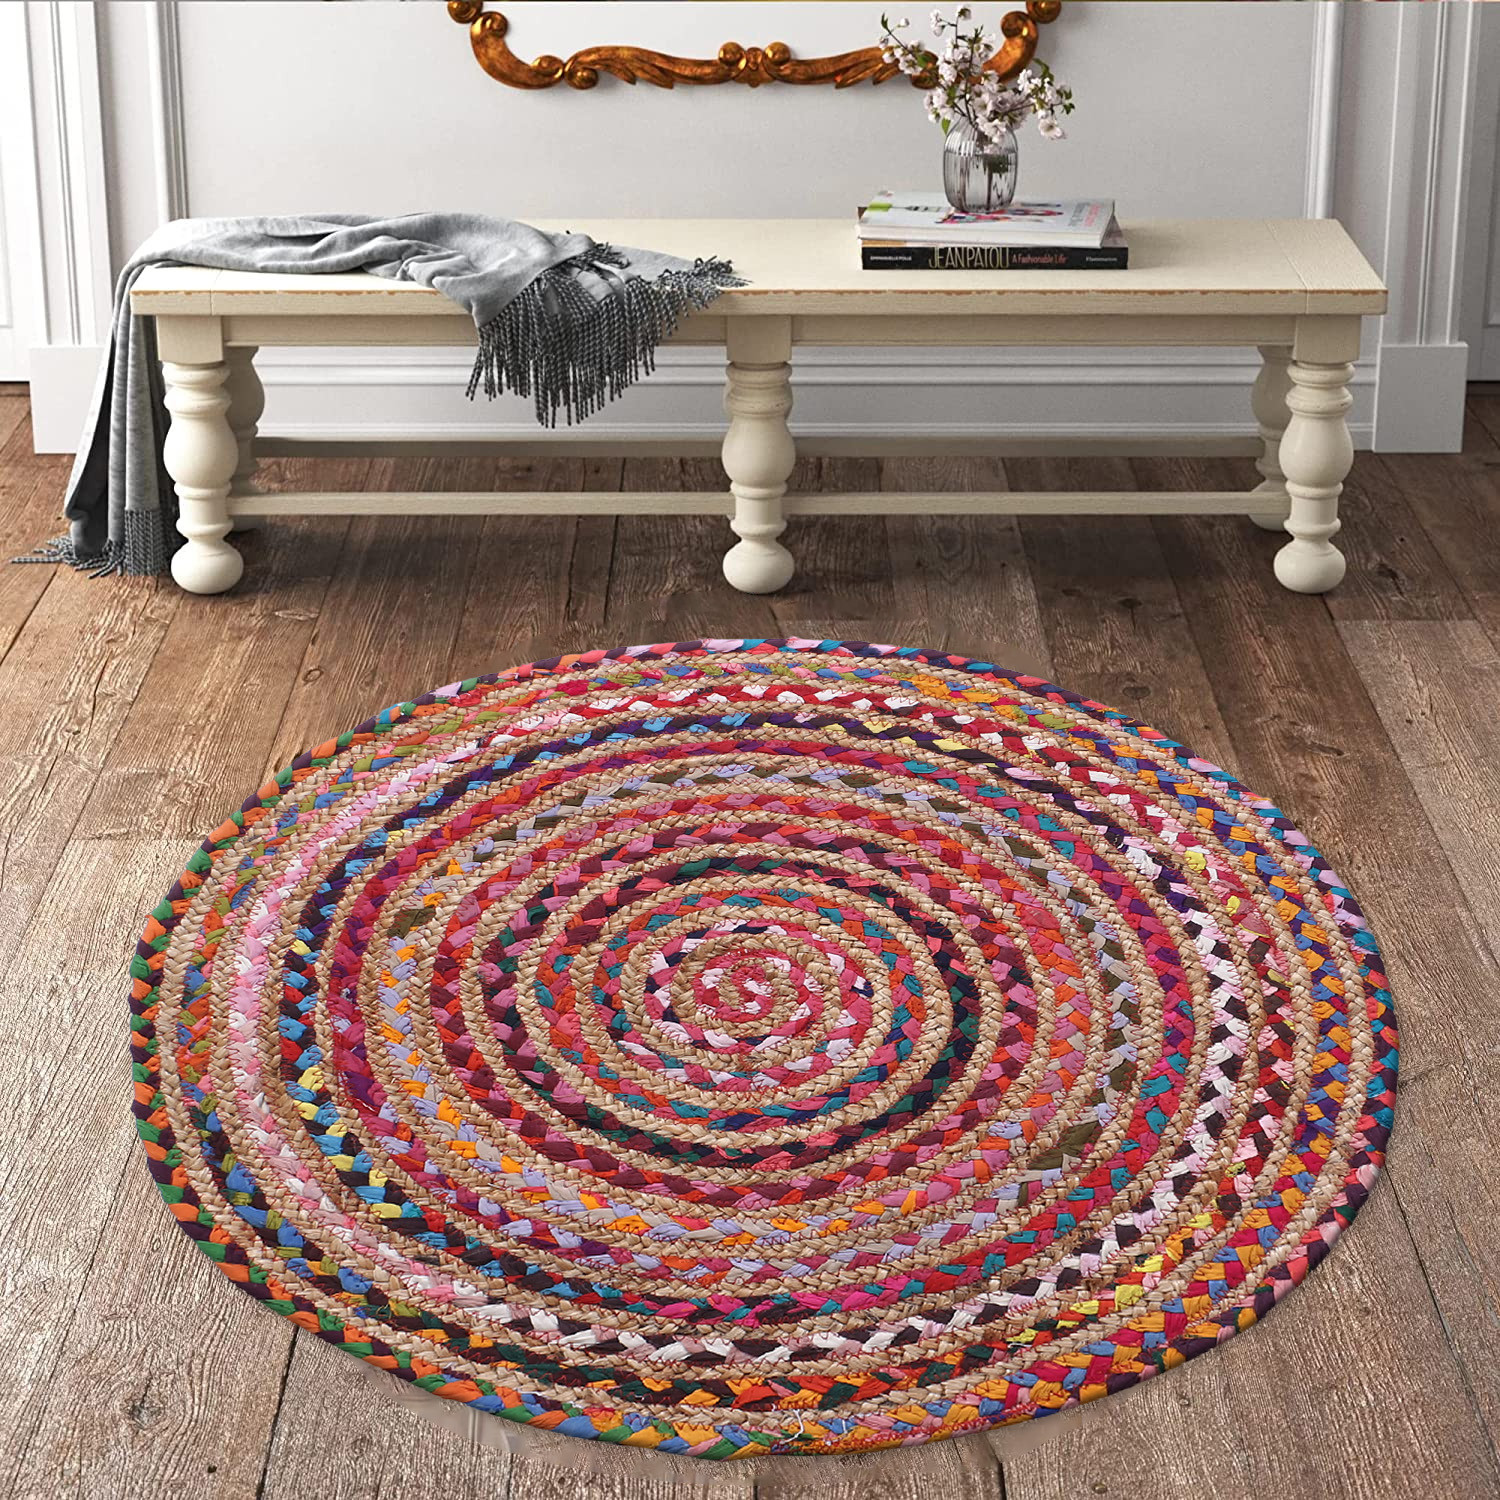 Kuber Industries Handmade Braided Area Rug|Organic Natural Jute Door Mat|Carpet For Bedroom,Living Room,Dining Room,65x65 cm,(Multicolor)